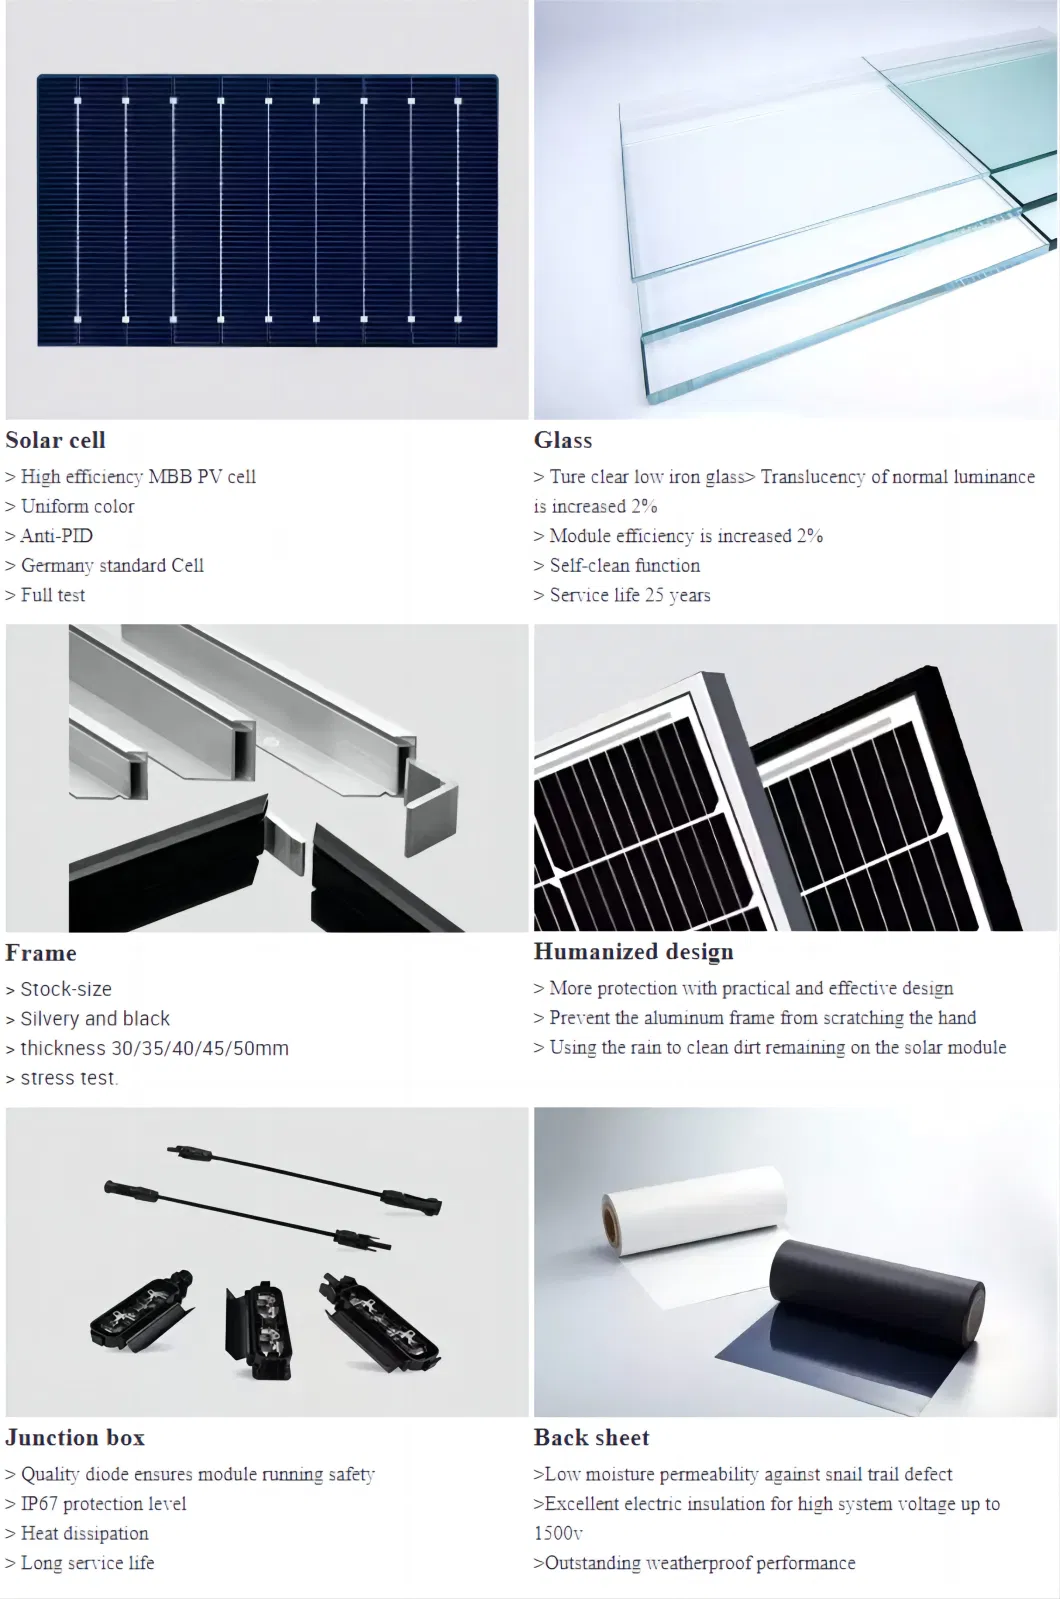 Trina Solar Vertex S PV Mono 640W 650W 655W 660W 132 Half Cells Solar Panel Solar Energy Panels